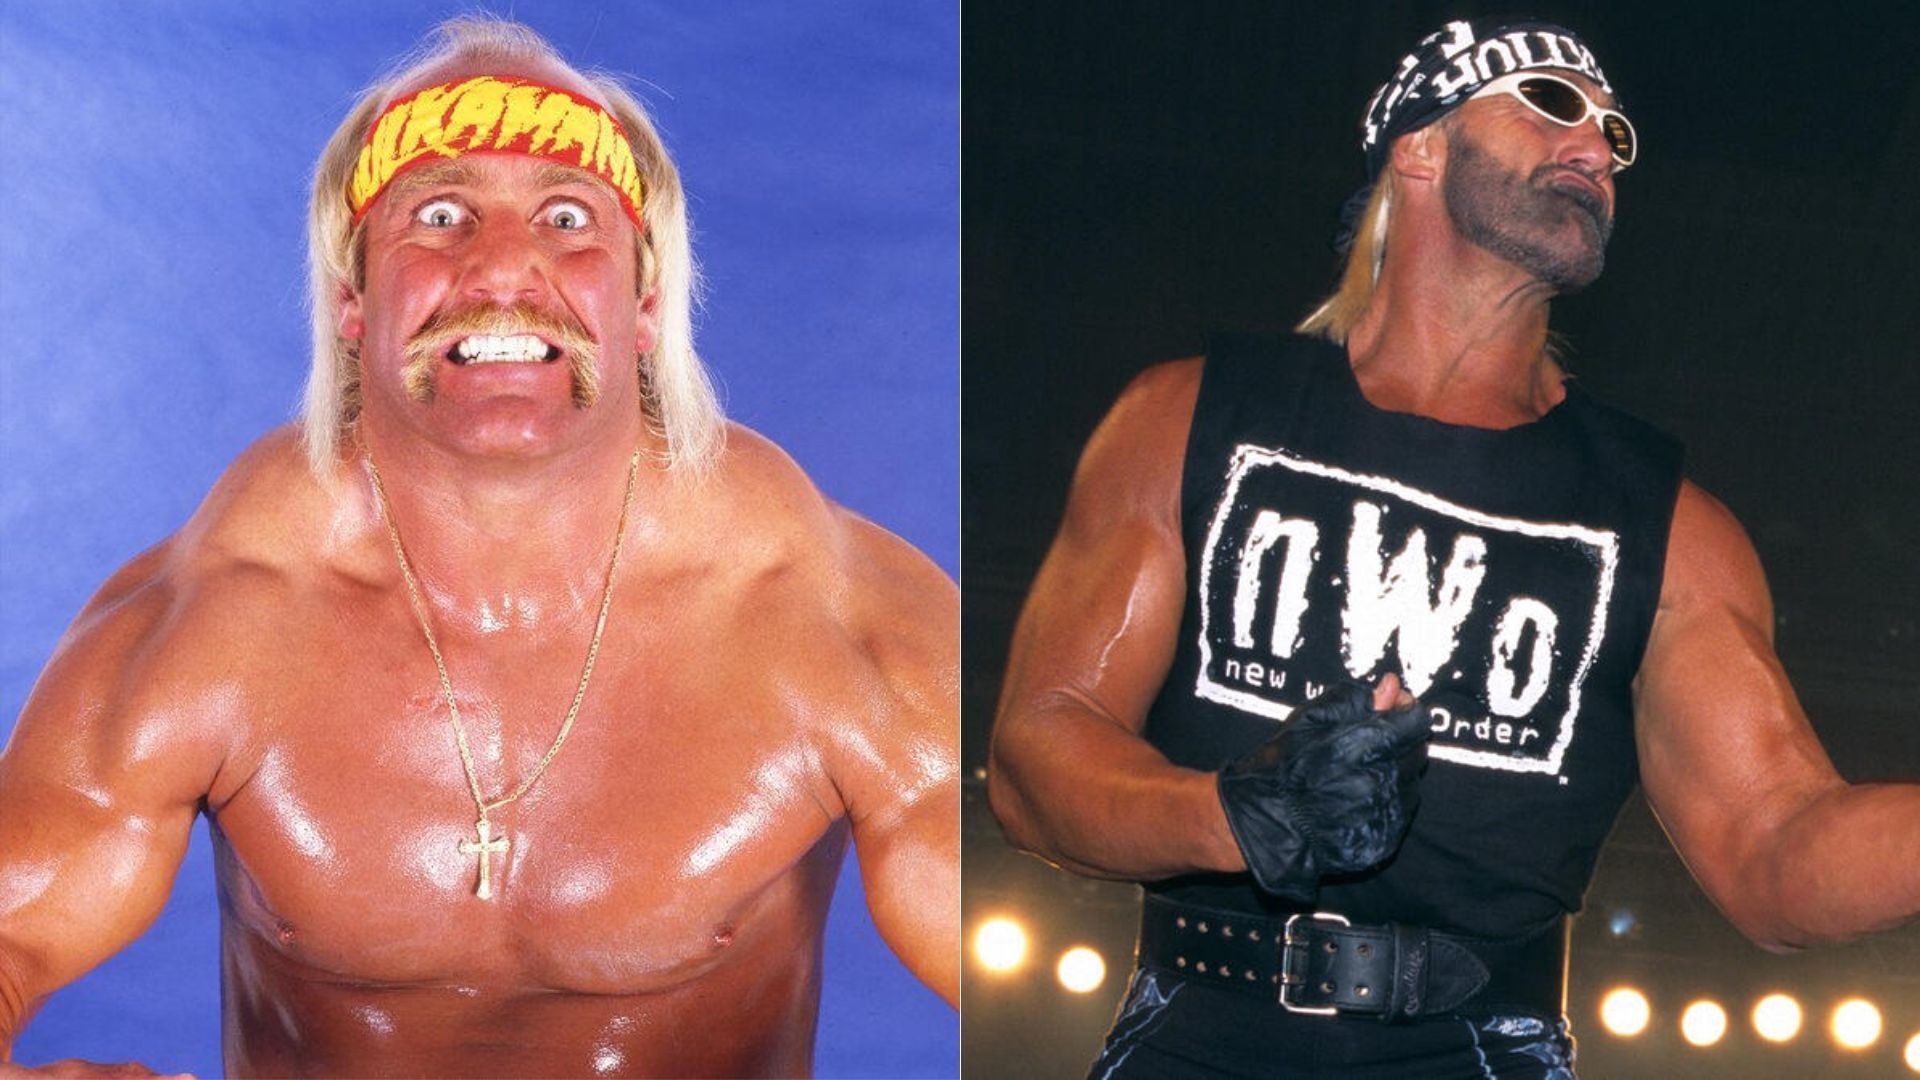 WCW and WWE legend Hulk Hogan [Image Credit: wwe.com]